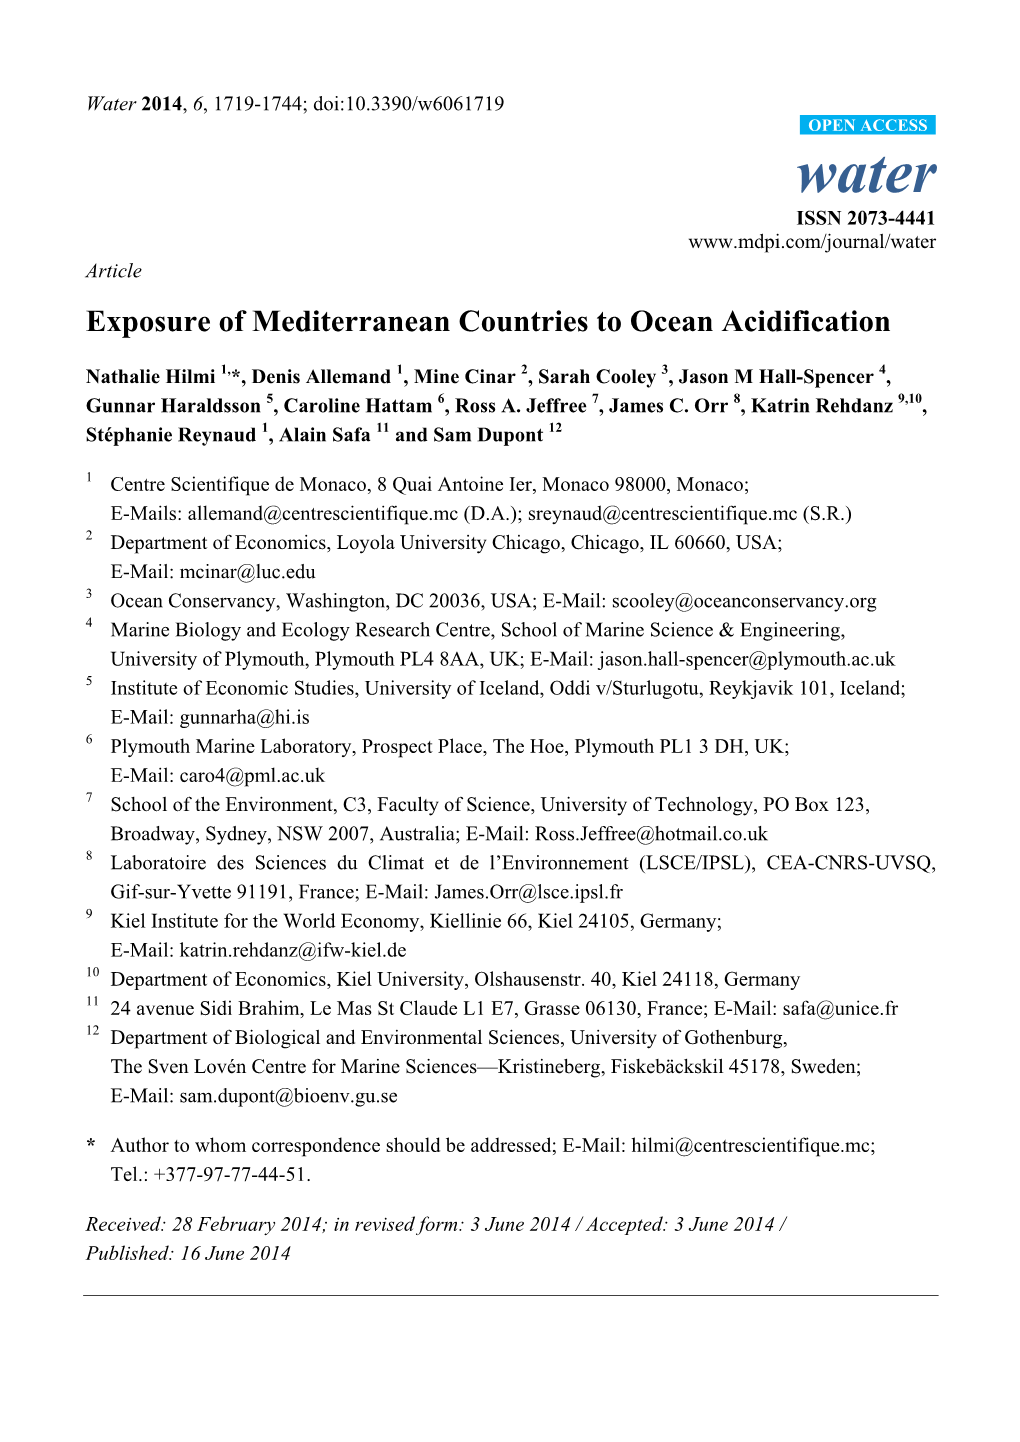 Exposure of Mediterranean Countries to Ocean Acidification